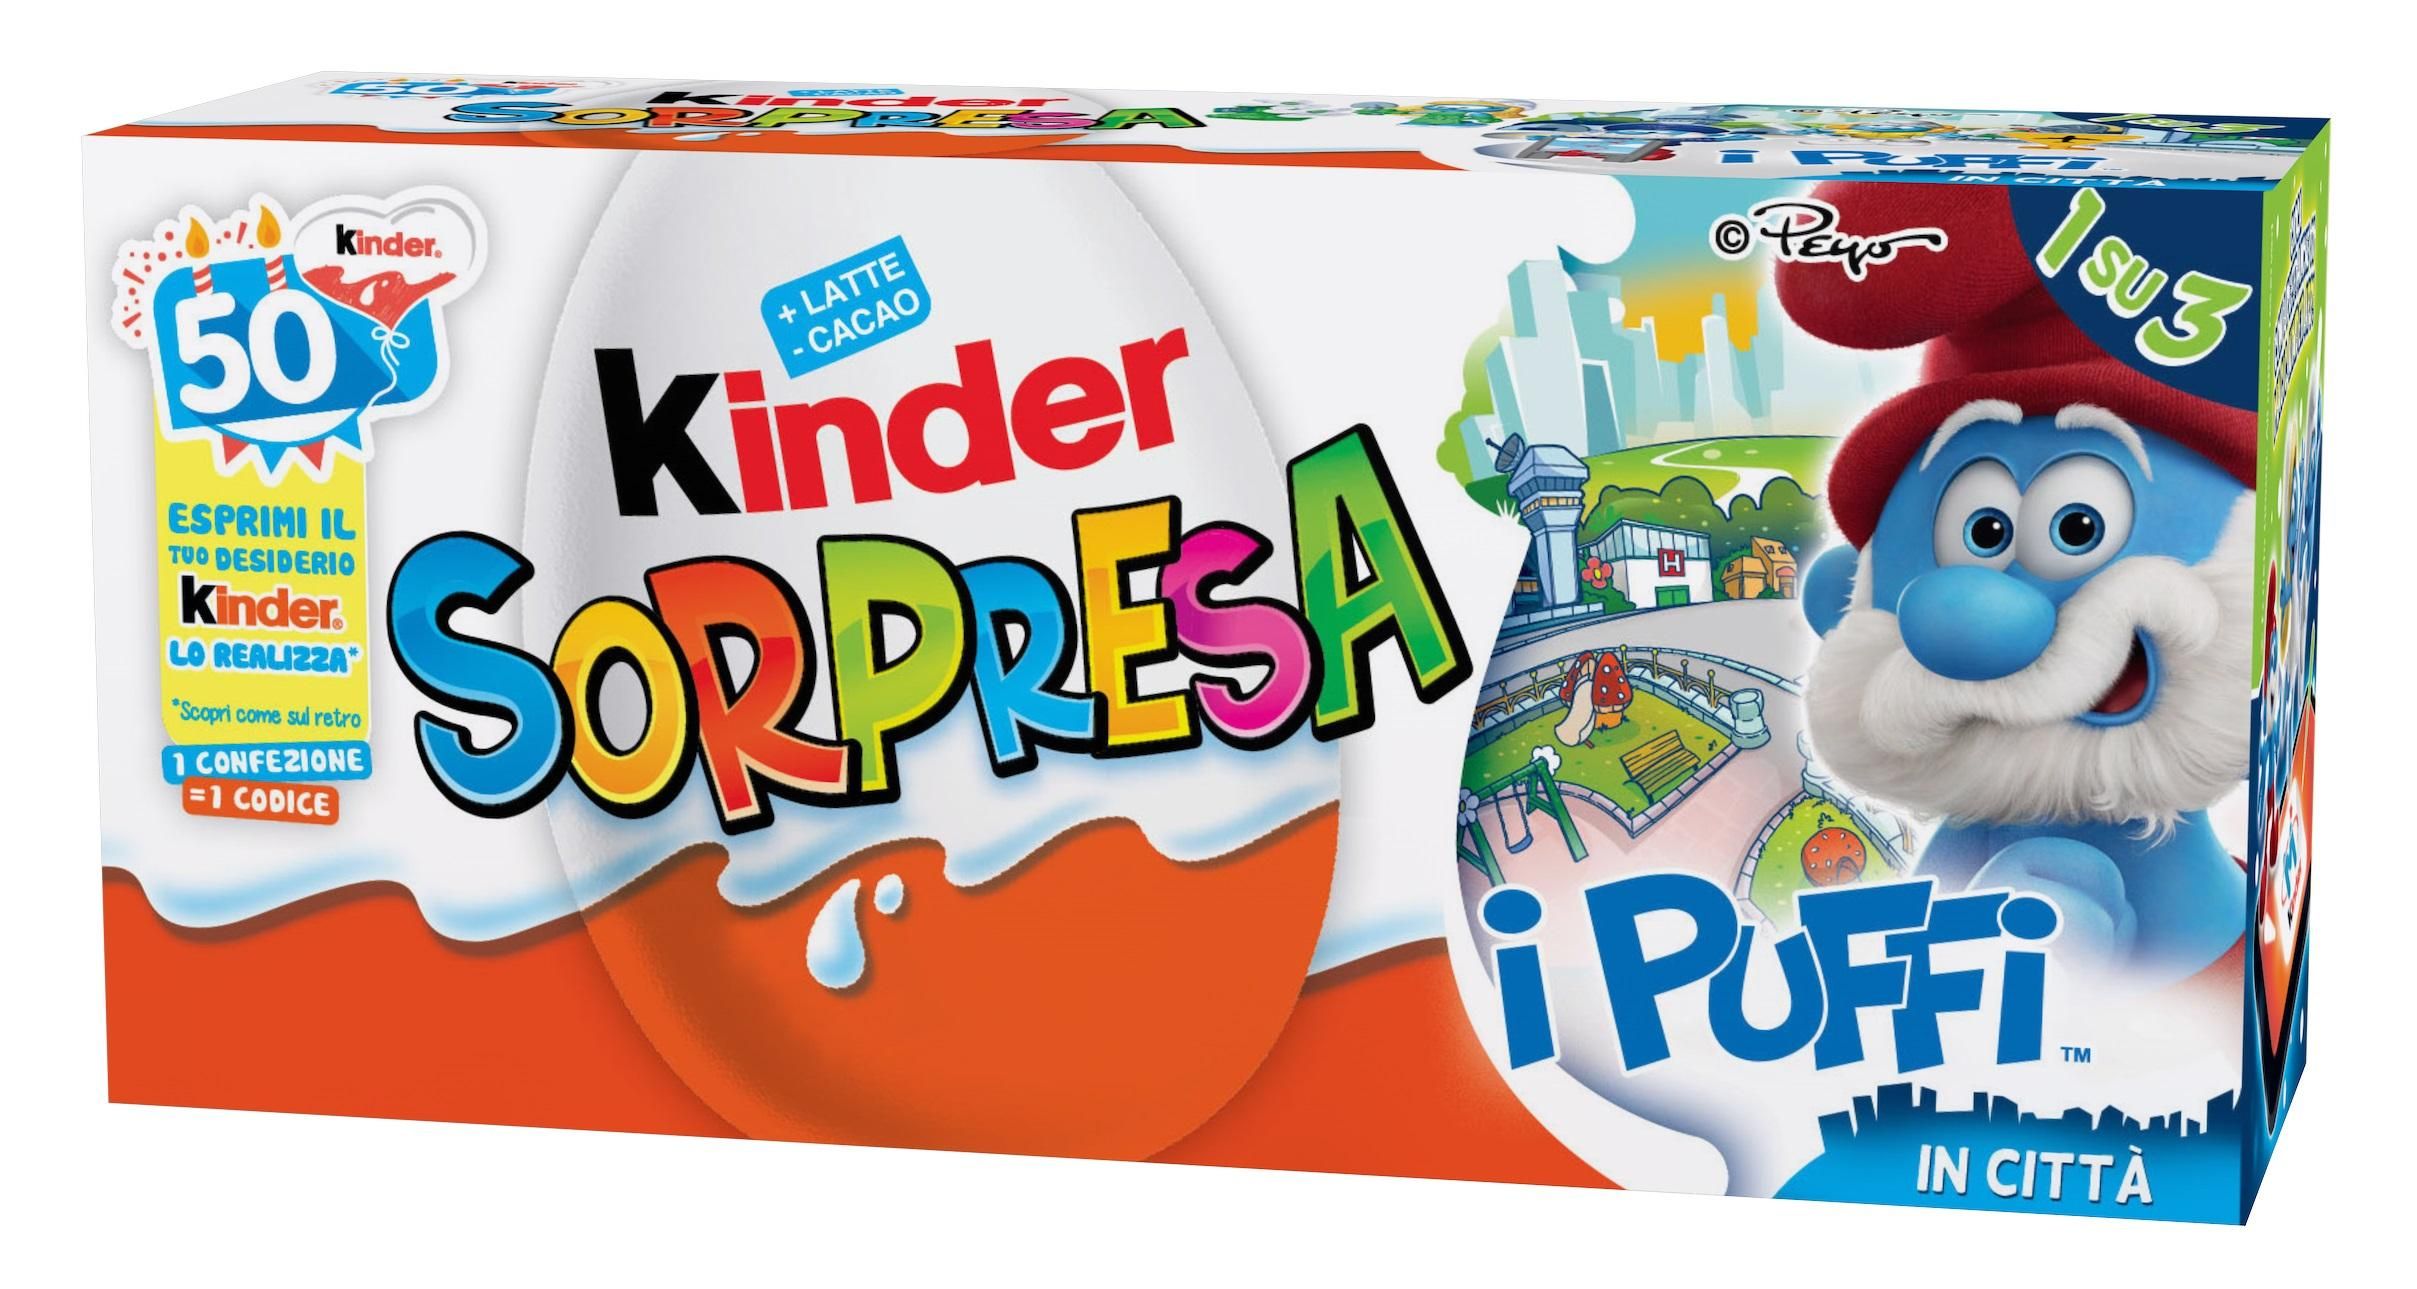 Kinder Surprise 3-pack, Worldwide delivery